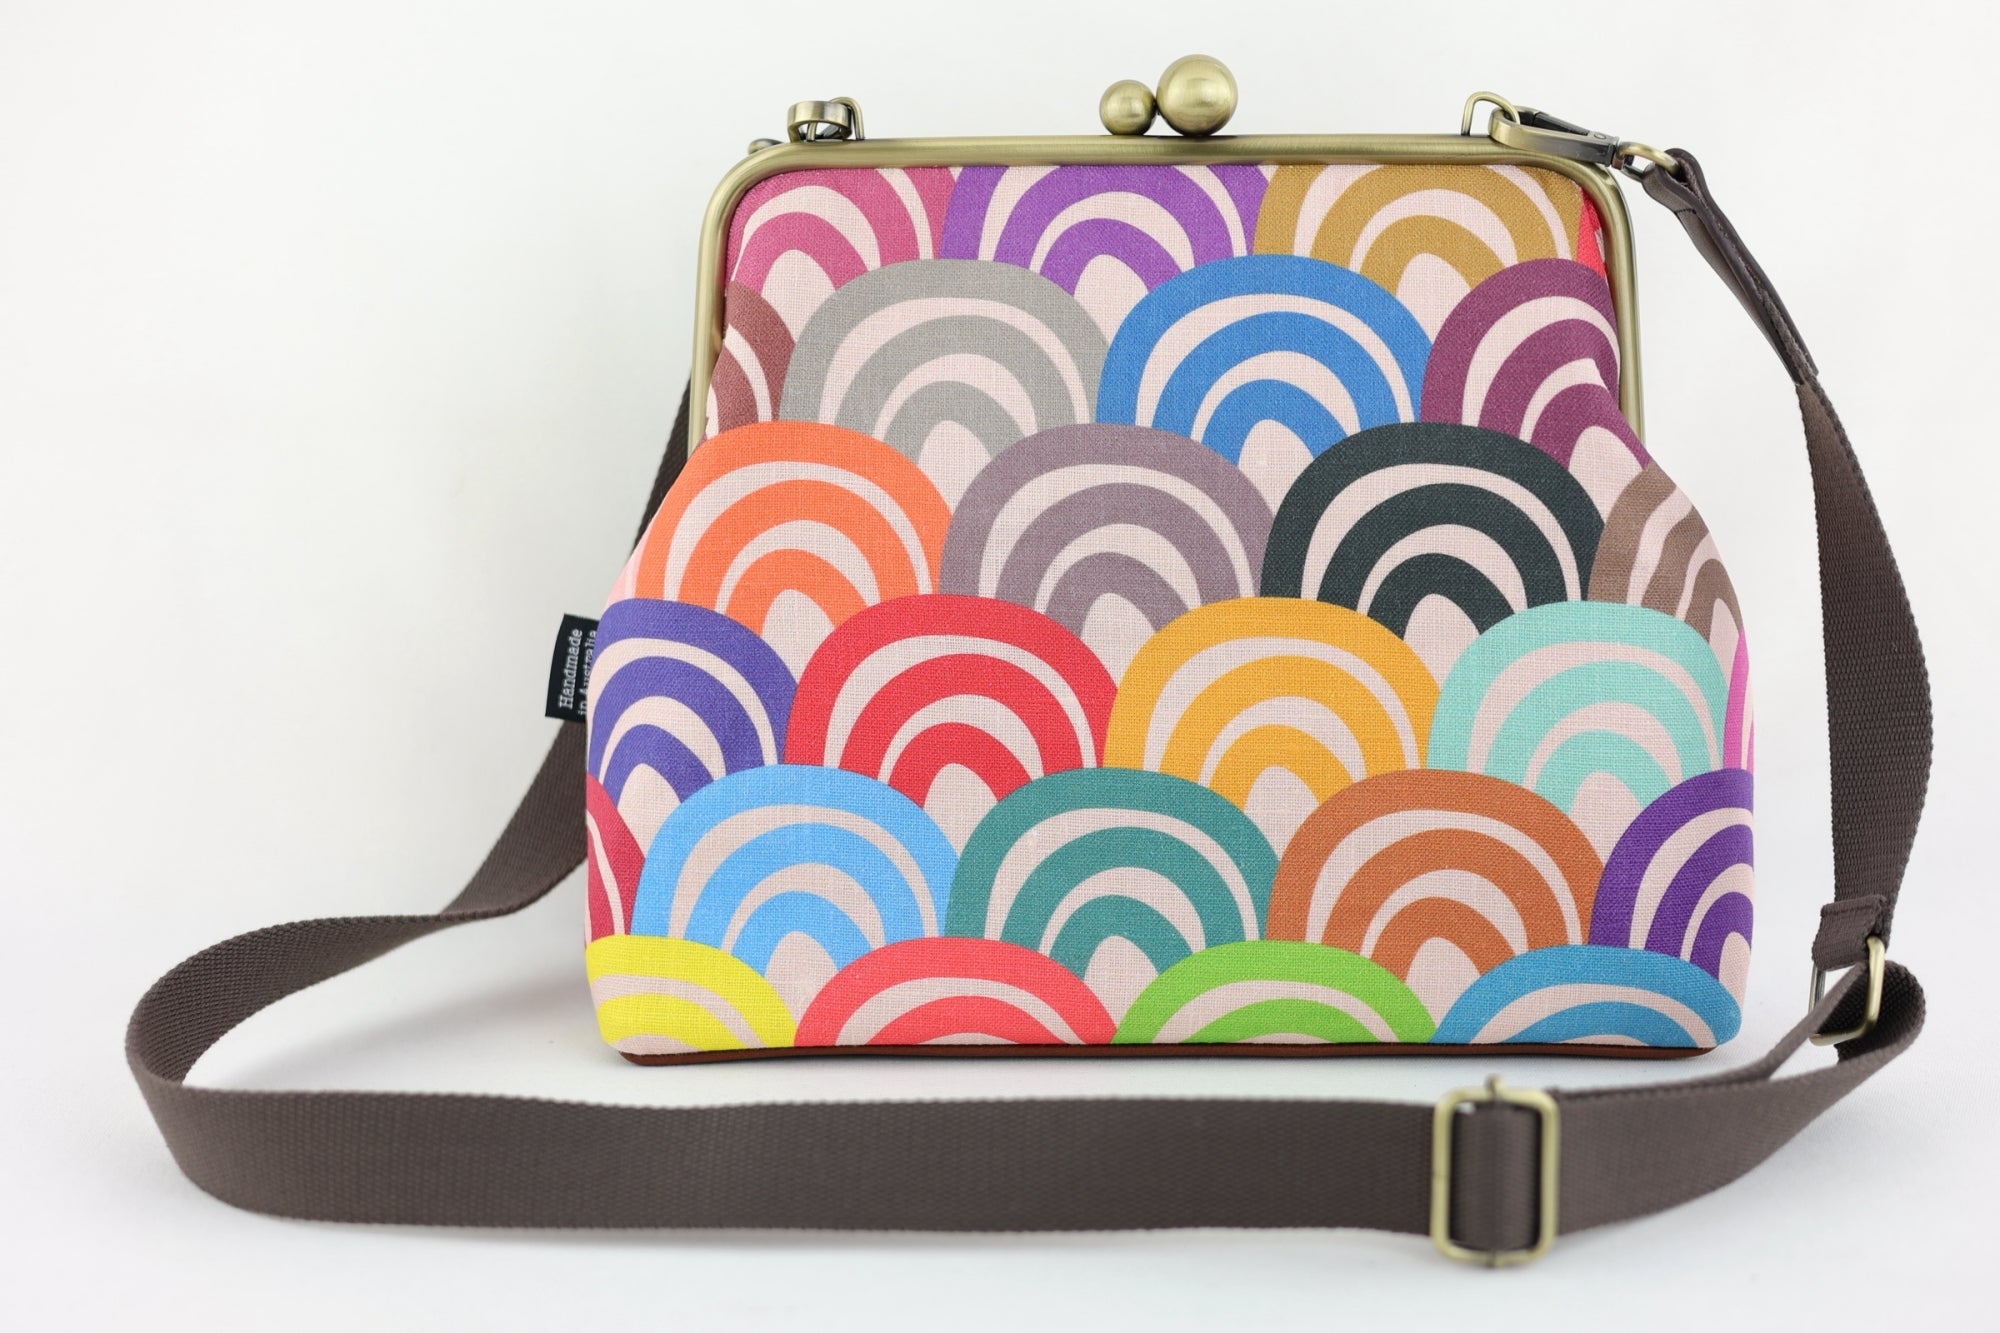 Rainbow Handbag and Crossbody 2 Way Bag | PINK OASIS